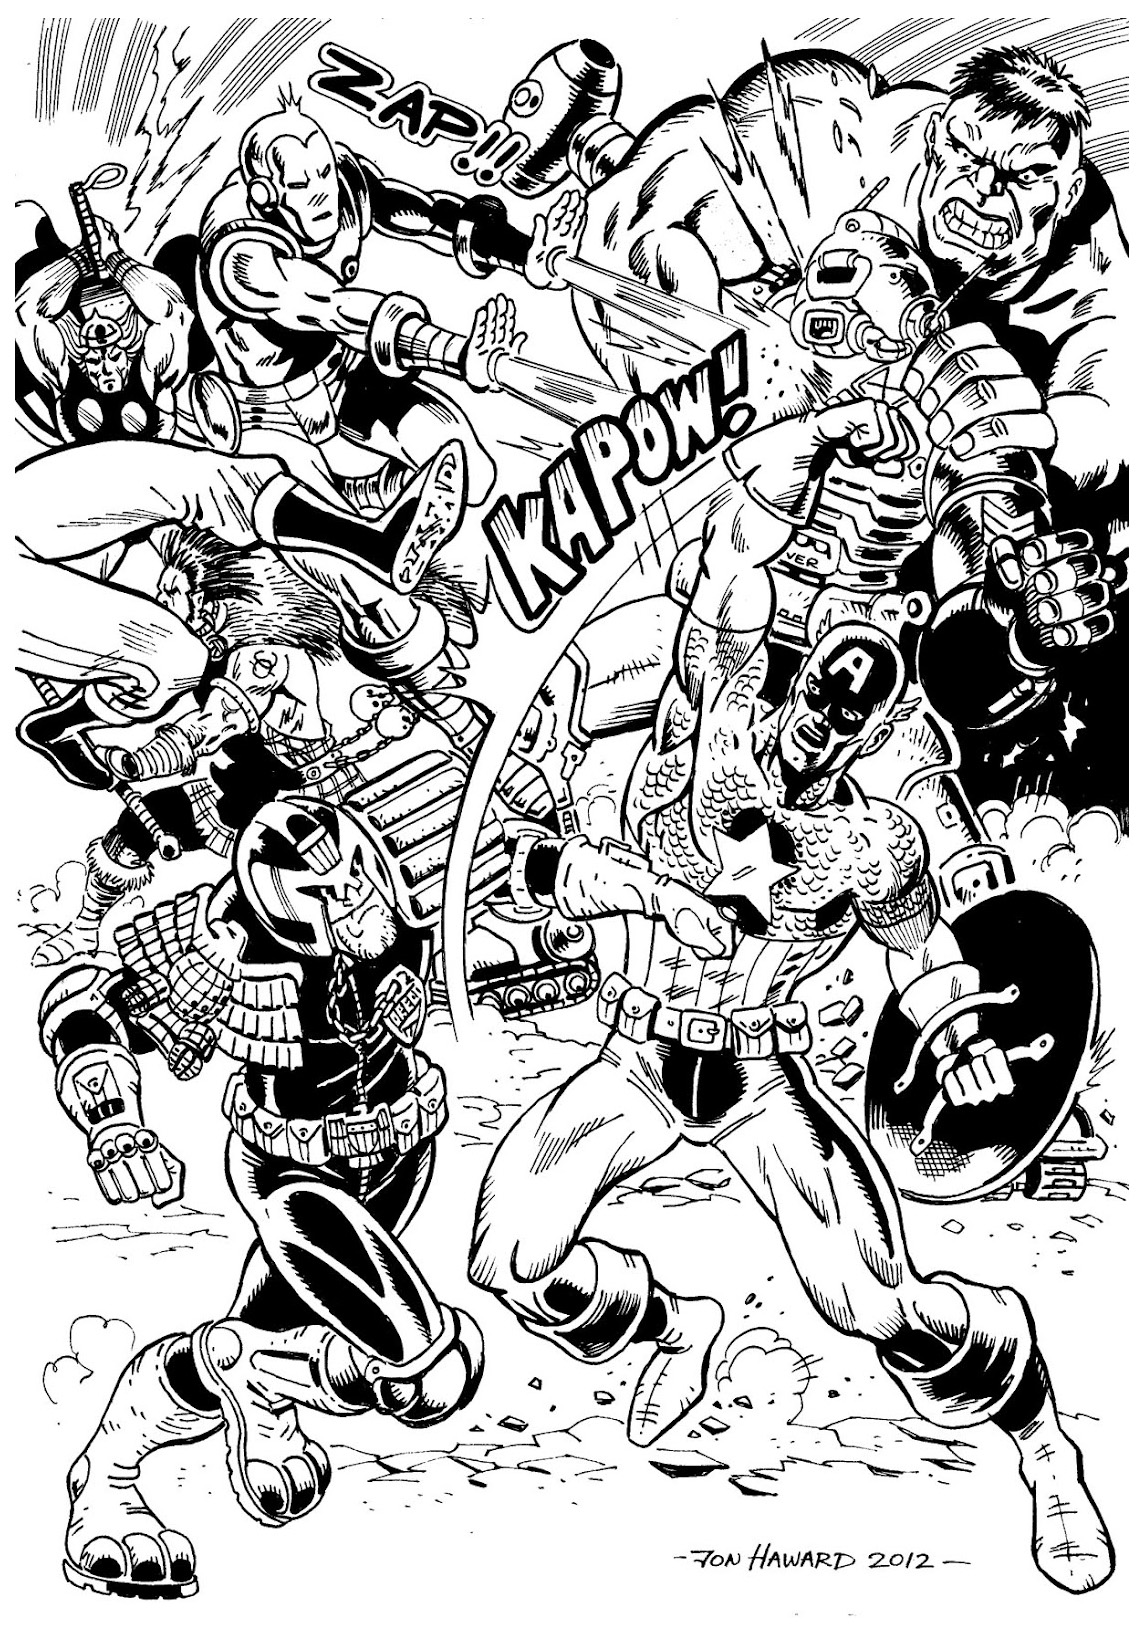 Original drawings of the Avengers